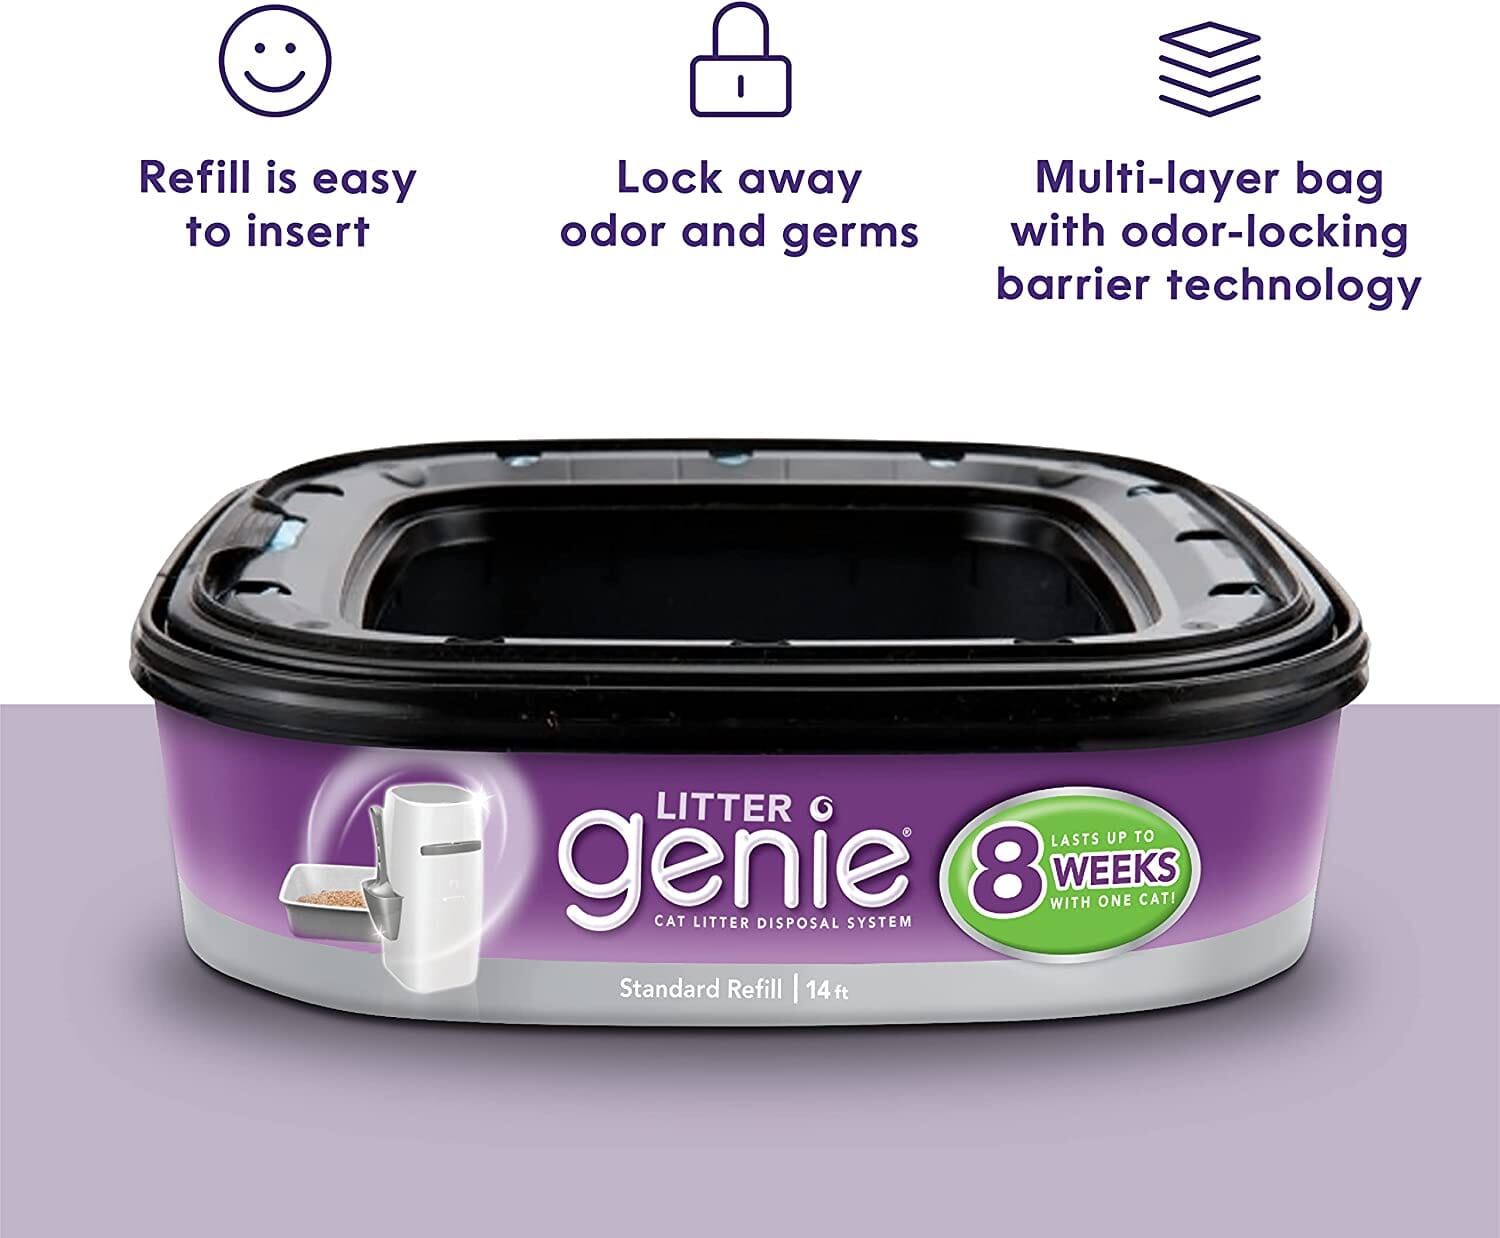 Litter Genie Litter Genie Plus Refill Cat Litter Disposal System - Black - 4 Pack  